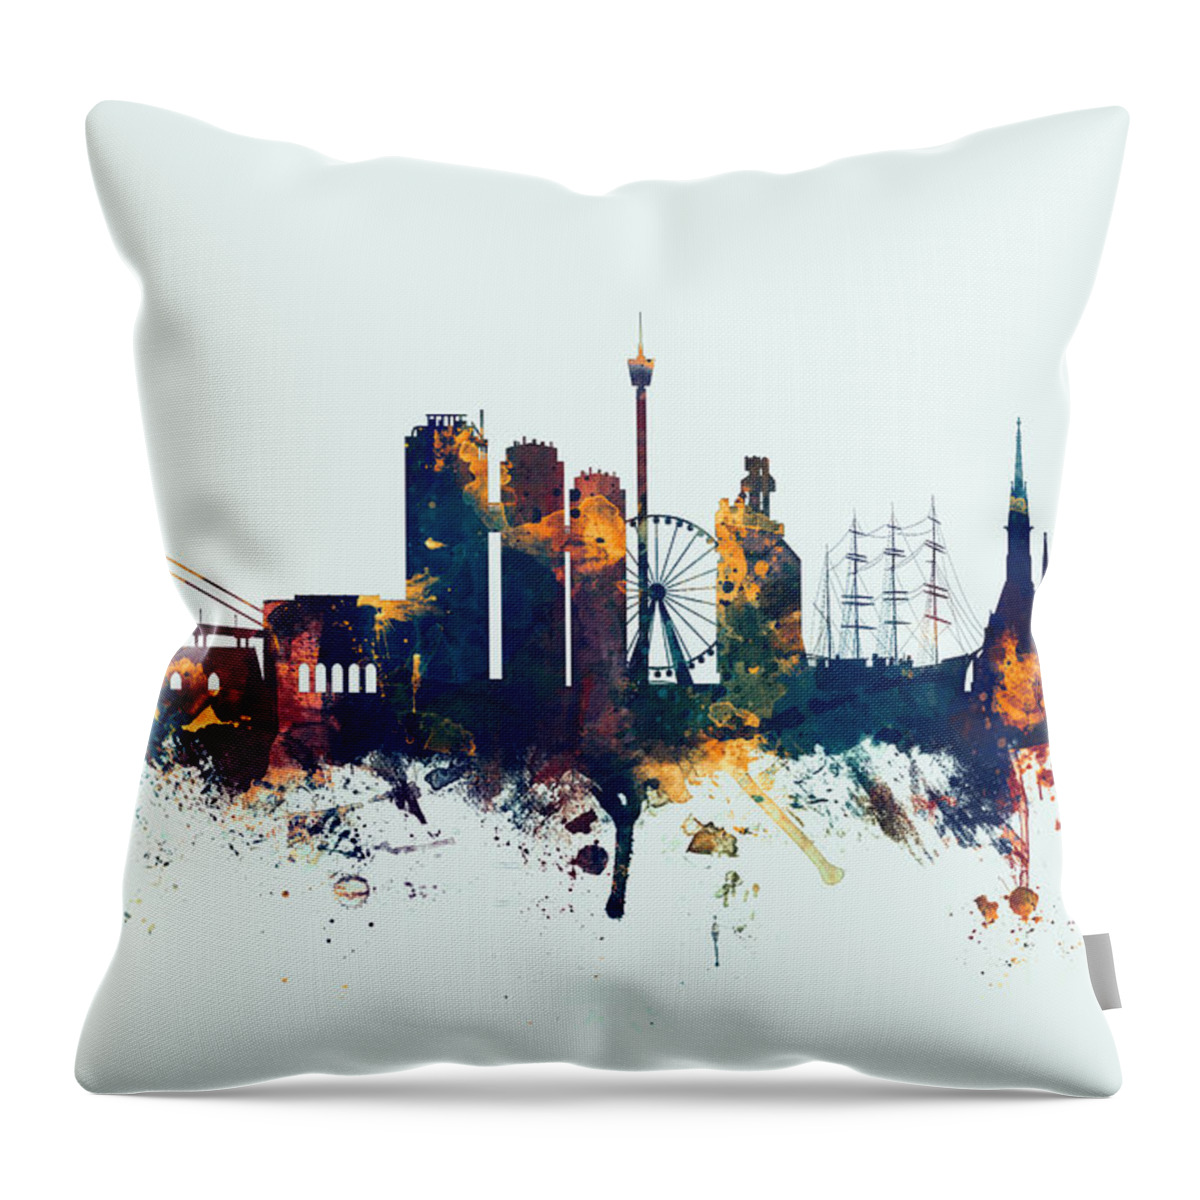 Sweden Throw Pillow featuring the digital art Gothenburg Sweden Skyline by Michael Tompsett